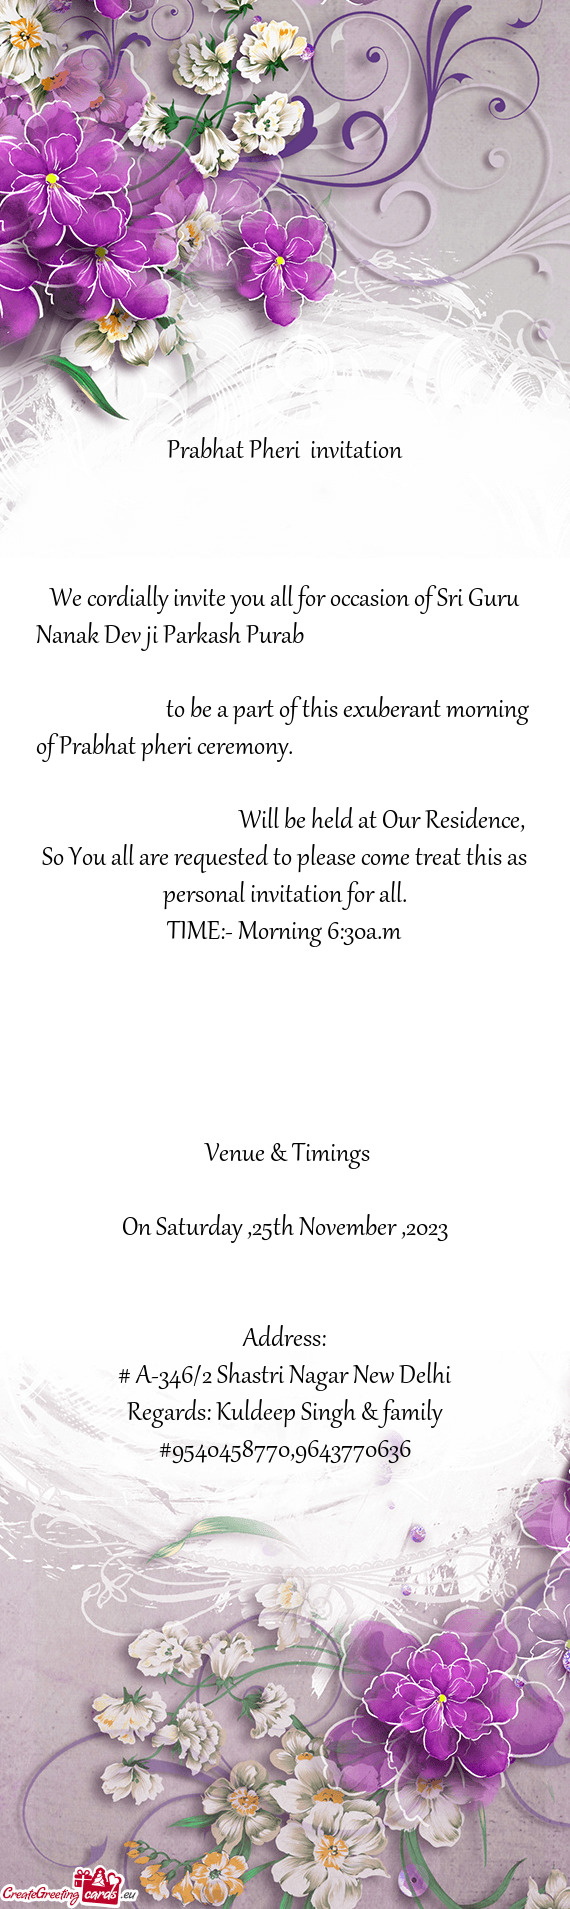 We cordially invite you all for occasion of Sri Guru Nanak Dev ji Parkash Purab